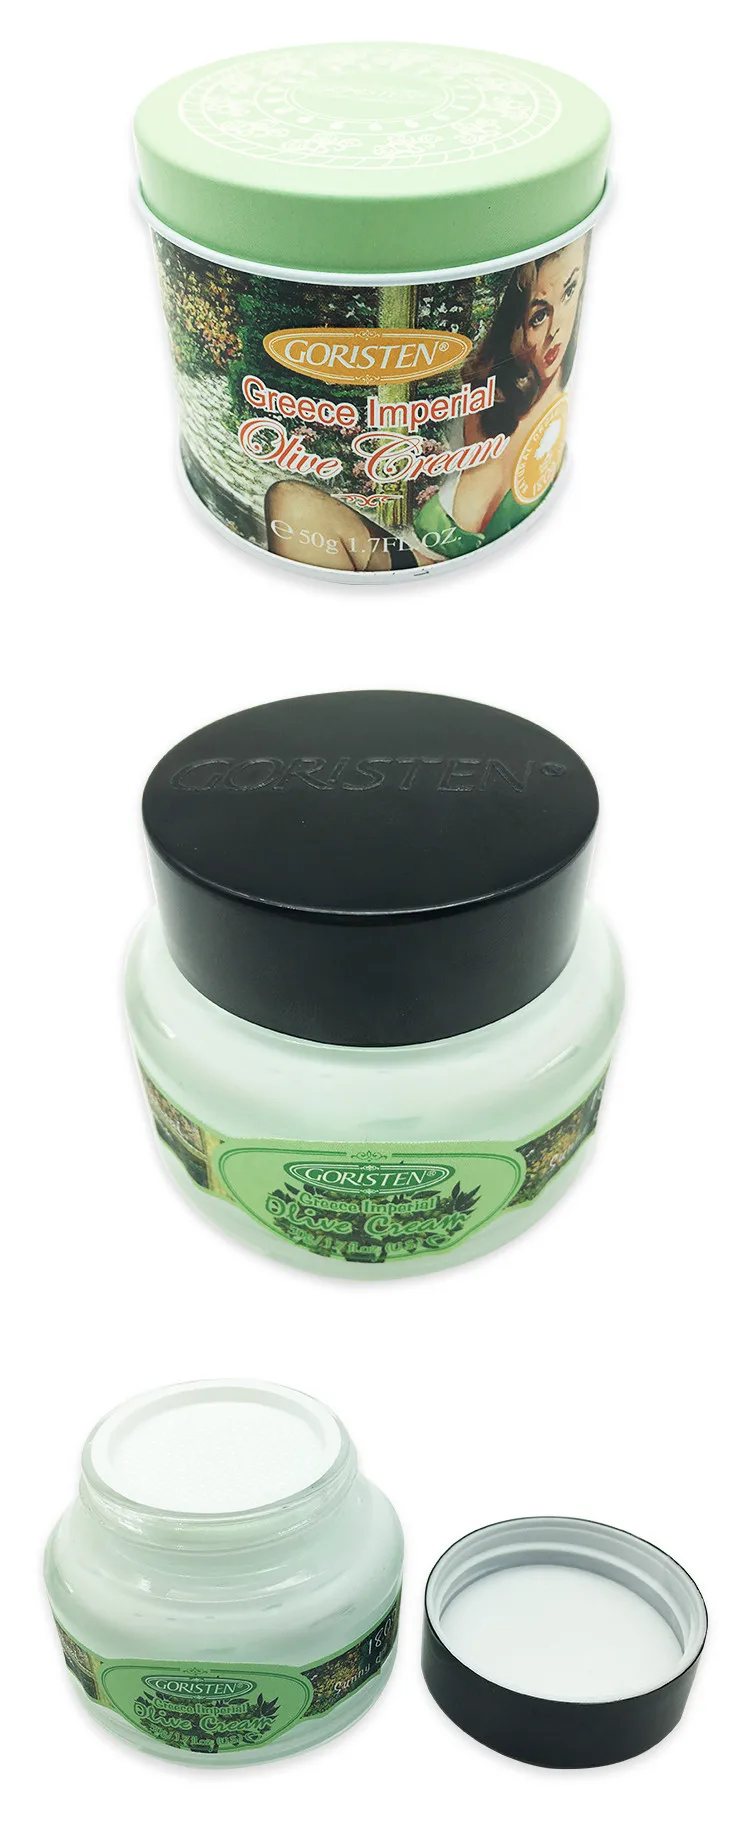 Cosmetic skin brightening moisturizing anti aging best olive face cream